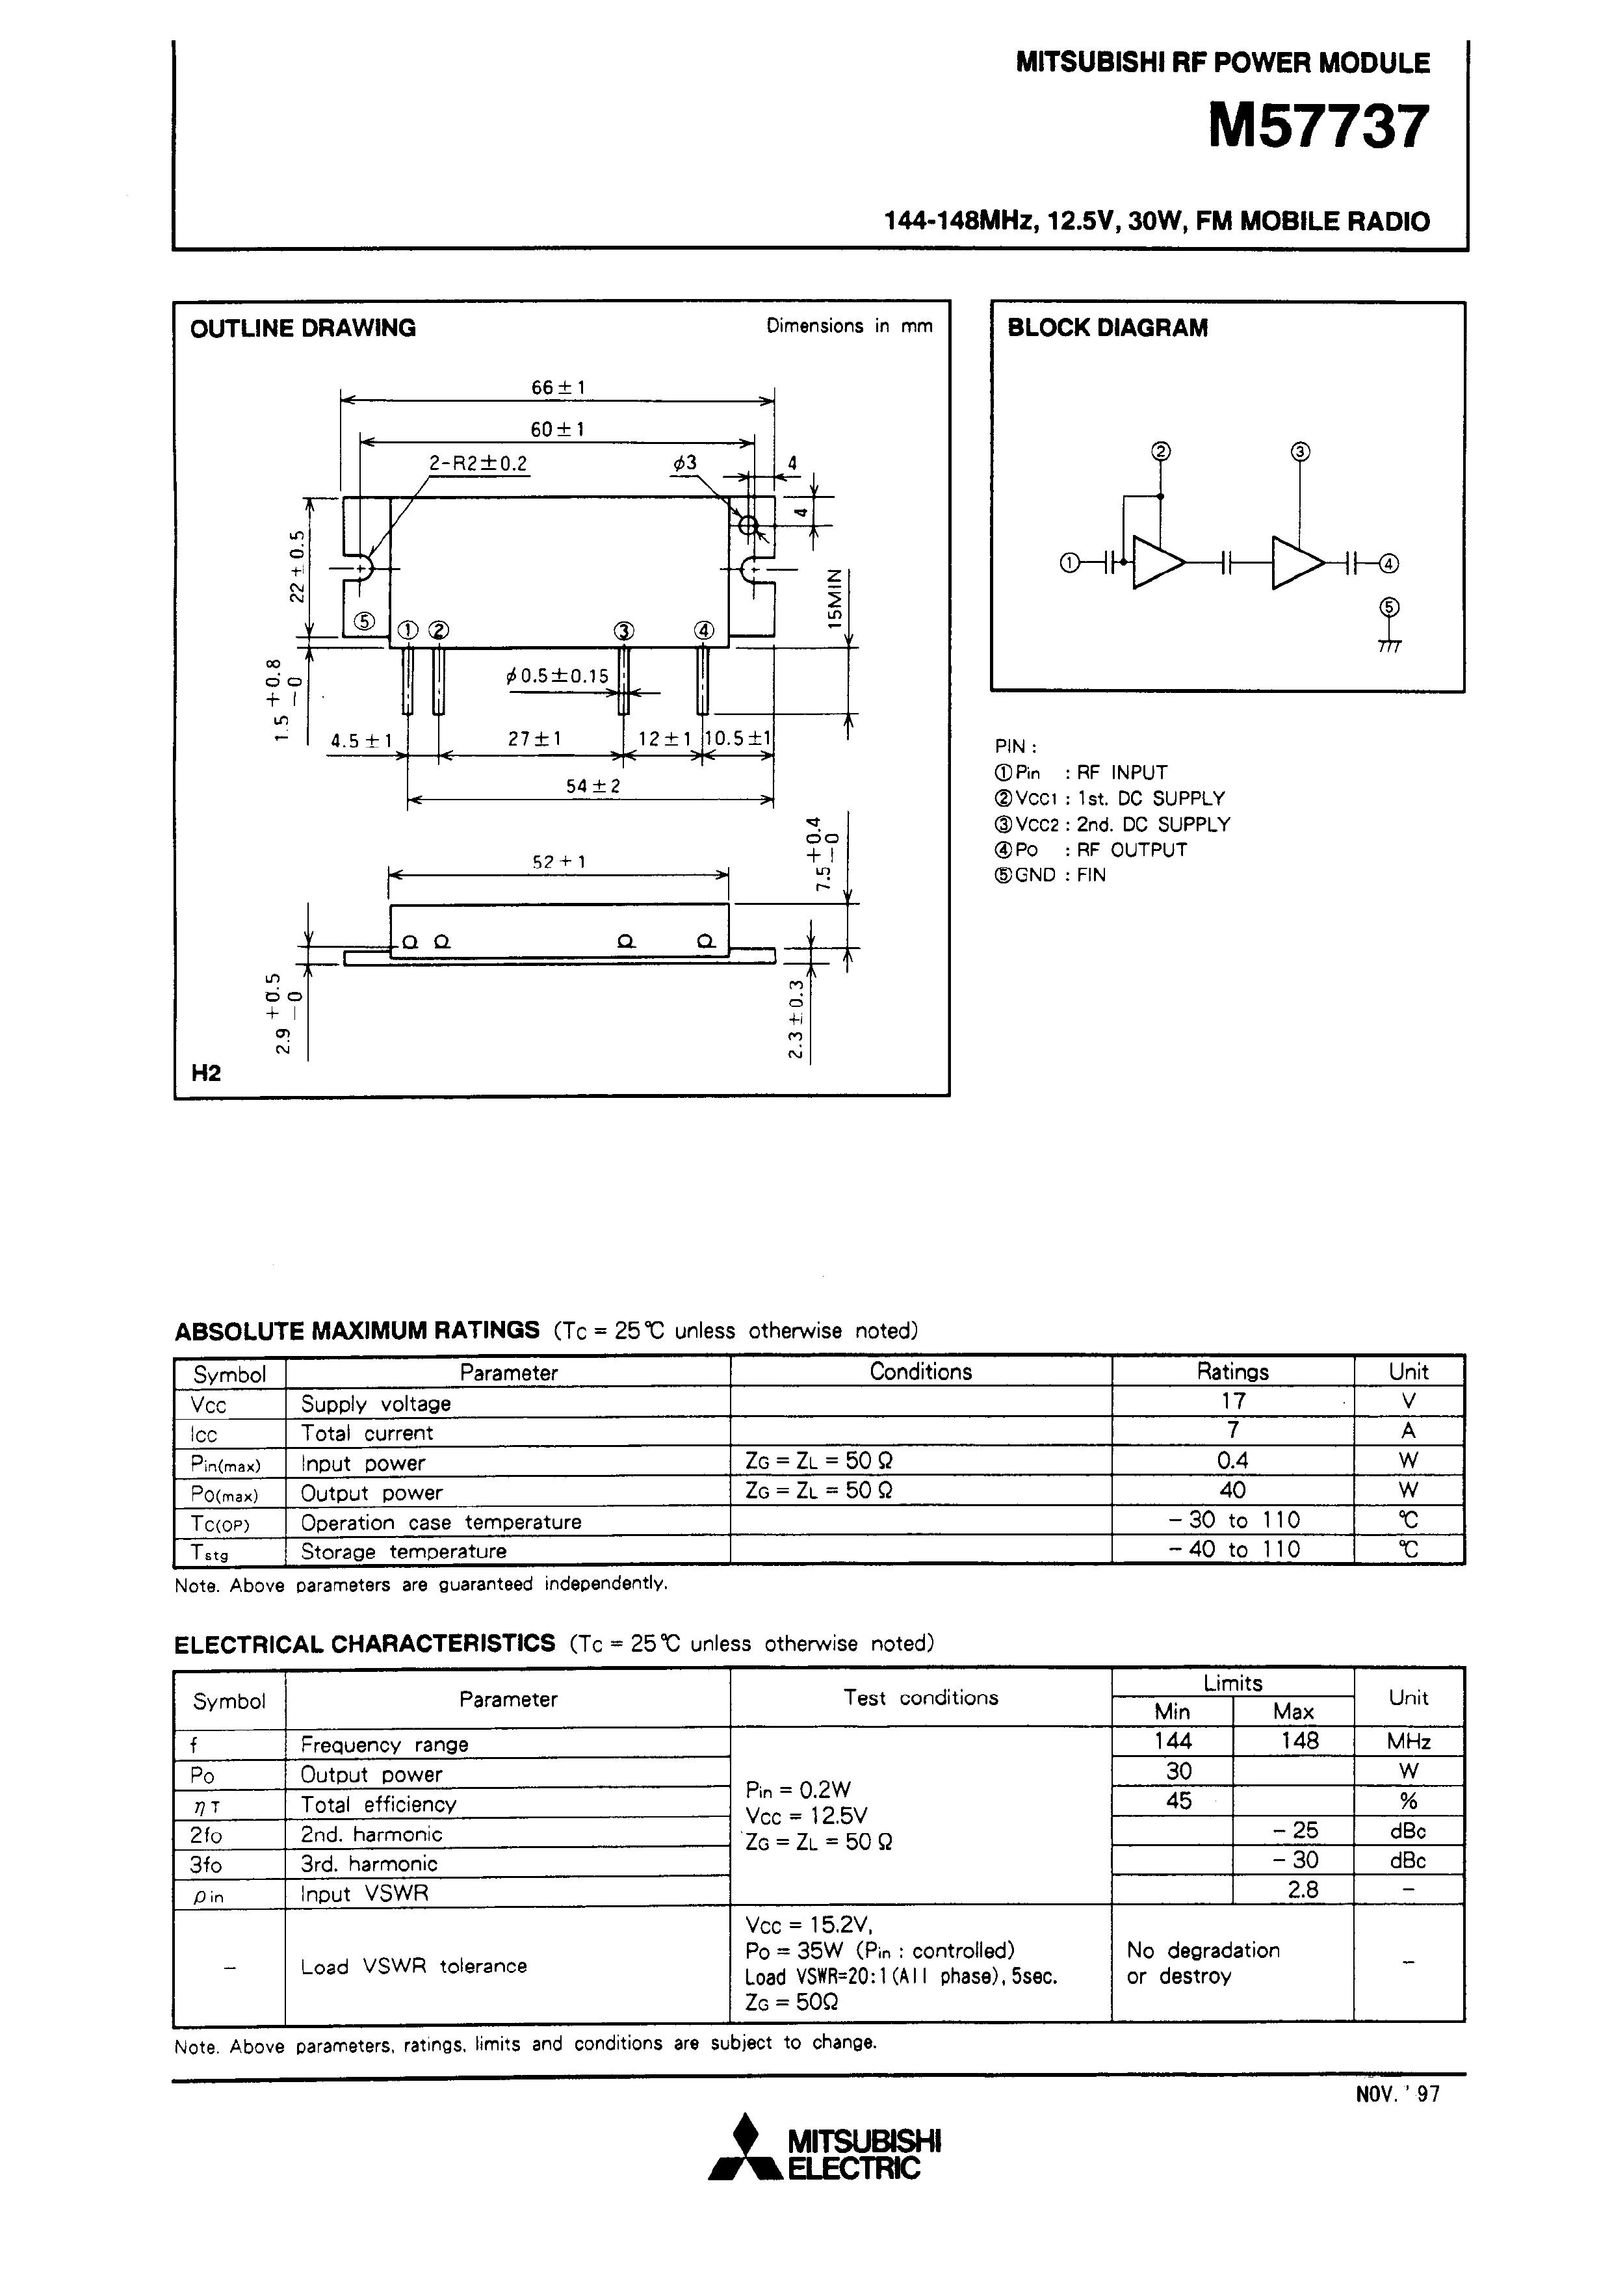 Mitsubishi Electronics M57737 Car Stereo System User Manual